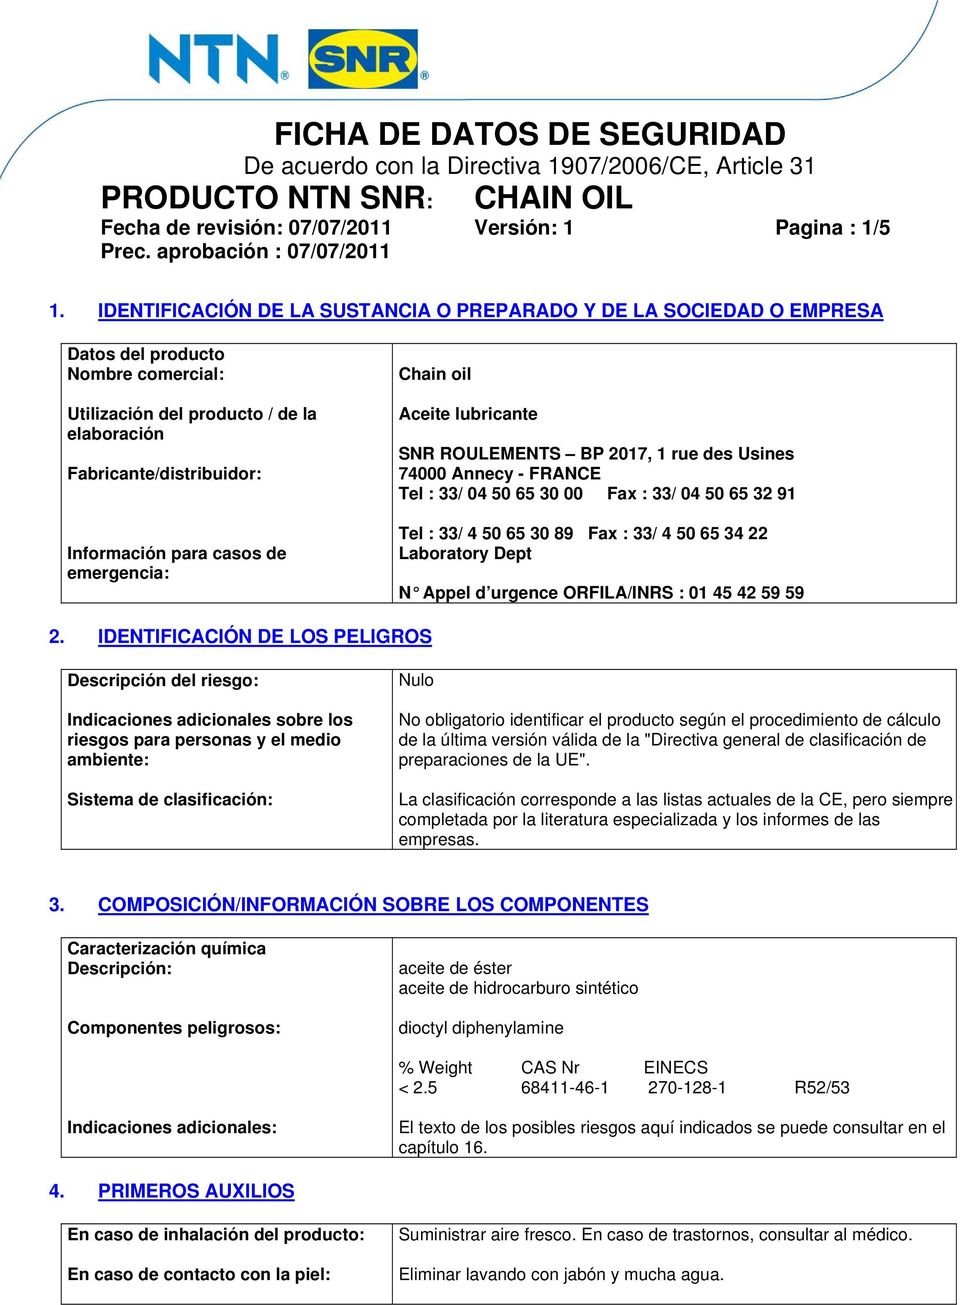 de emergencia: Chain oil Aceite lubricante SNR ROULEMENTS BP 2017, 1 rue des Usines 74000 Annecy FRANCE Tel : 33/ 04 50 65 30 00 Fax : 33/ 04 50 65 32 91 Tel : 33/ 4 50 65 30 89 Fax : 33/ 4 50 65 34